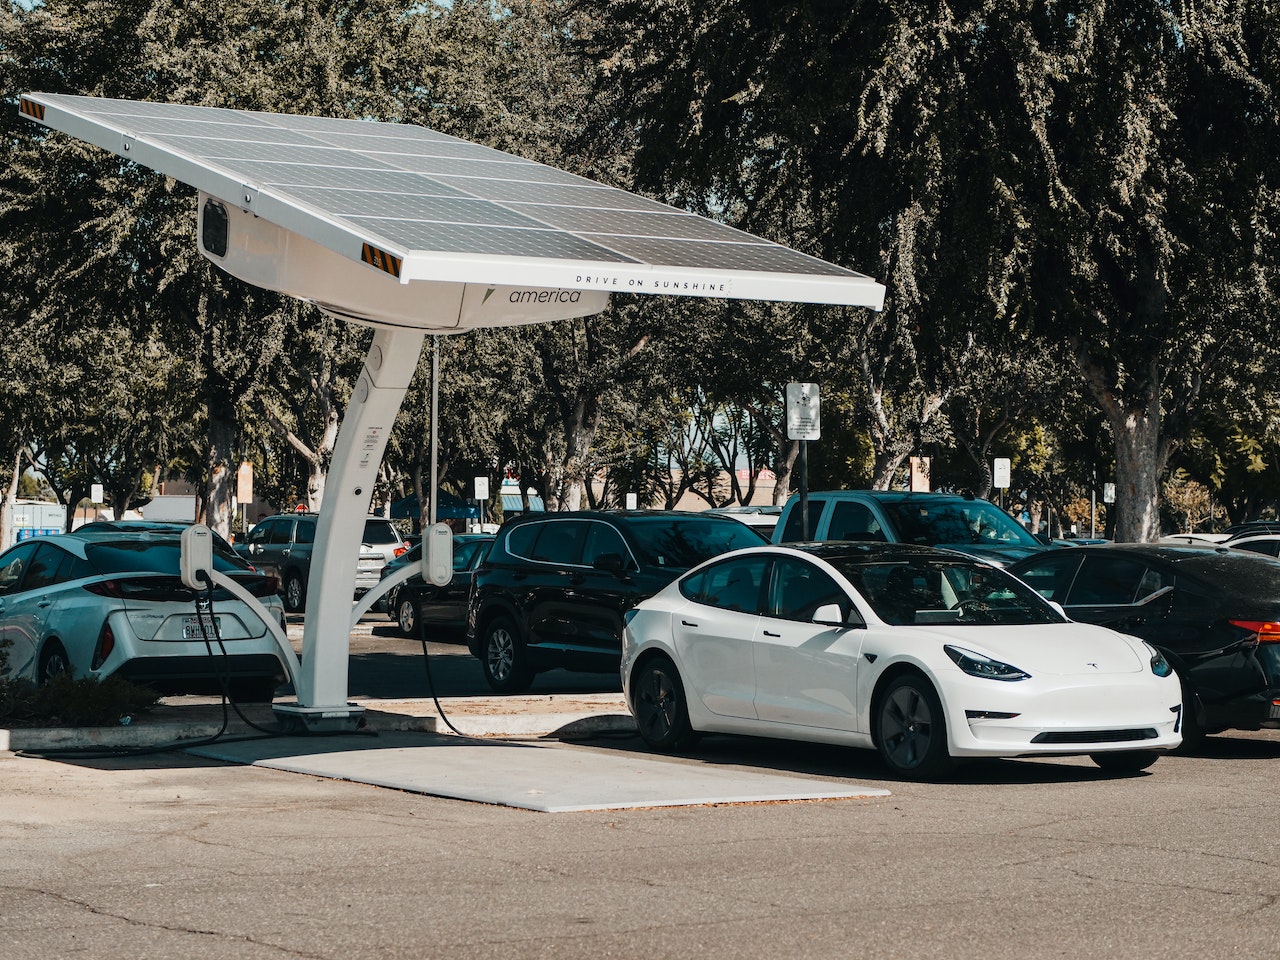 charging your EV using solar panels